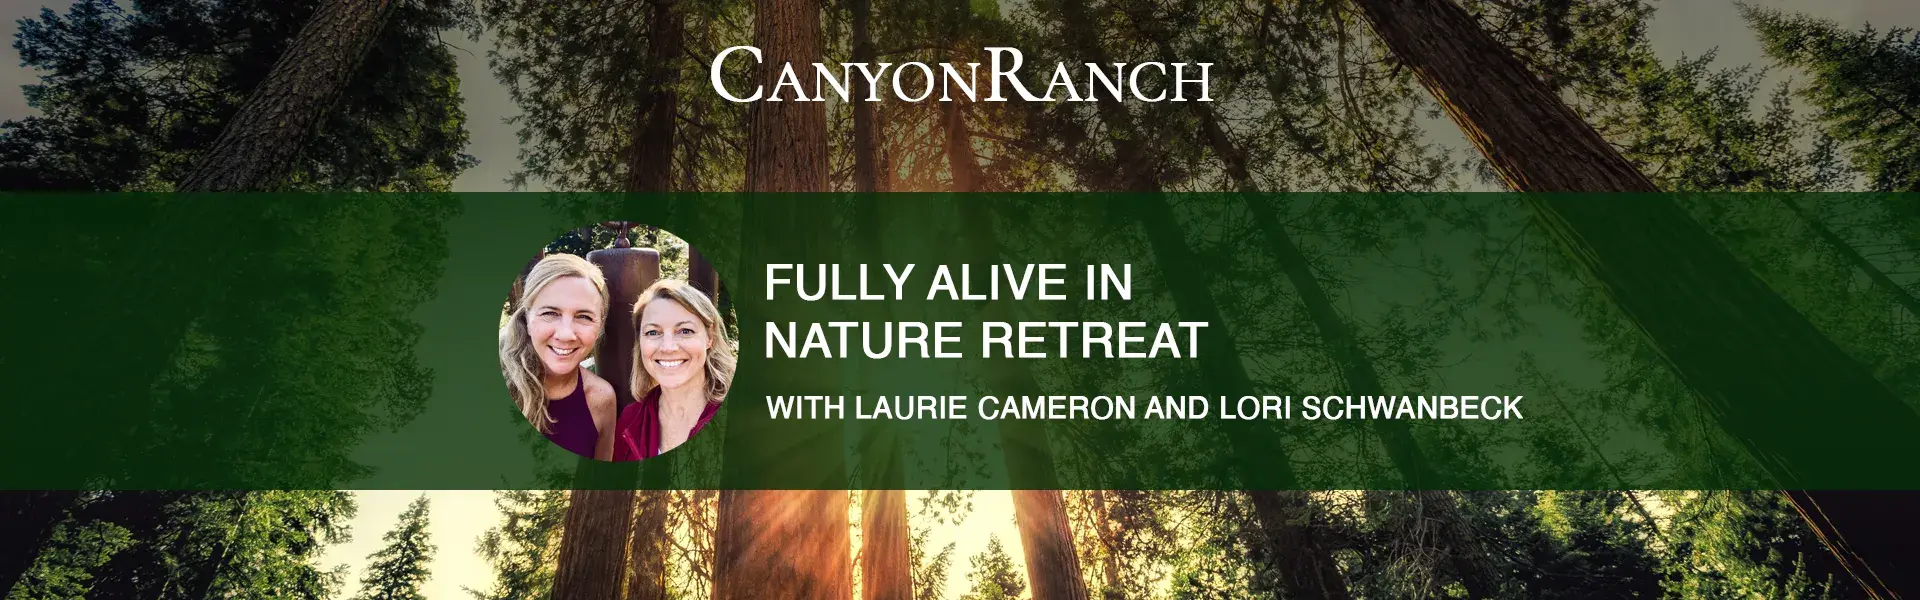 Canyon Ranch retreat 2022